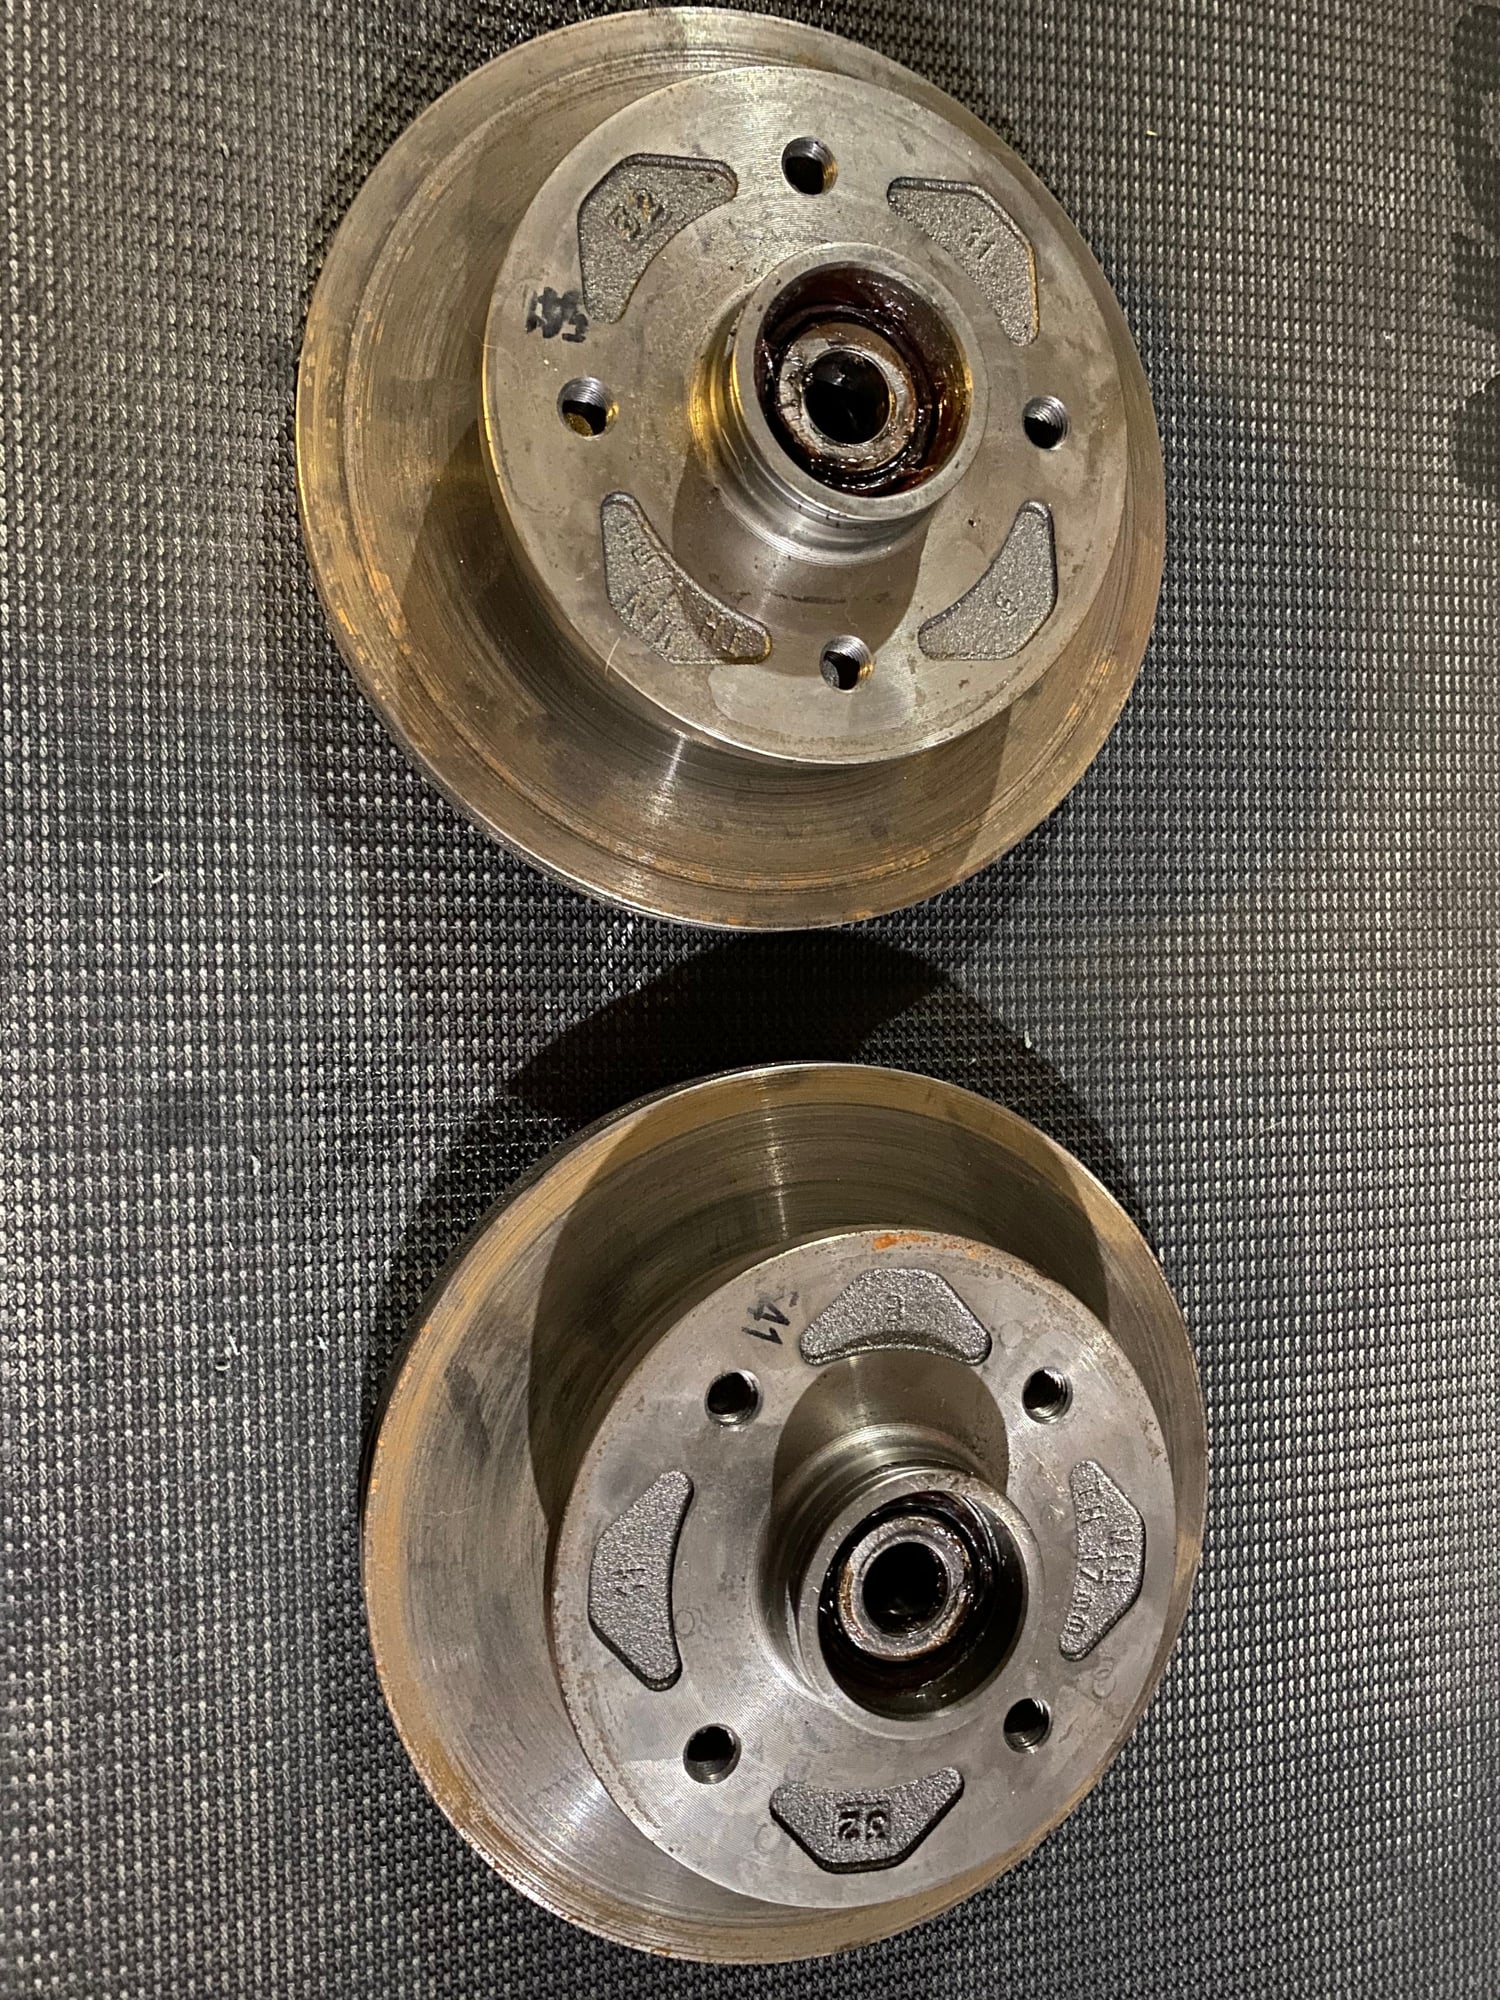 Brakes - FB brake rotors - Used - 1979 to 1985 Mazda RX-7 - Smiths Falls, ON K7A5J4, Canada